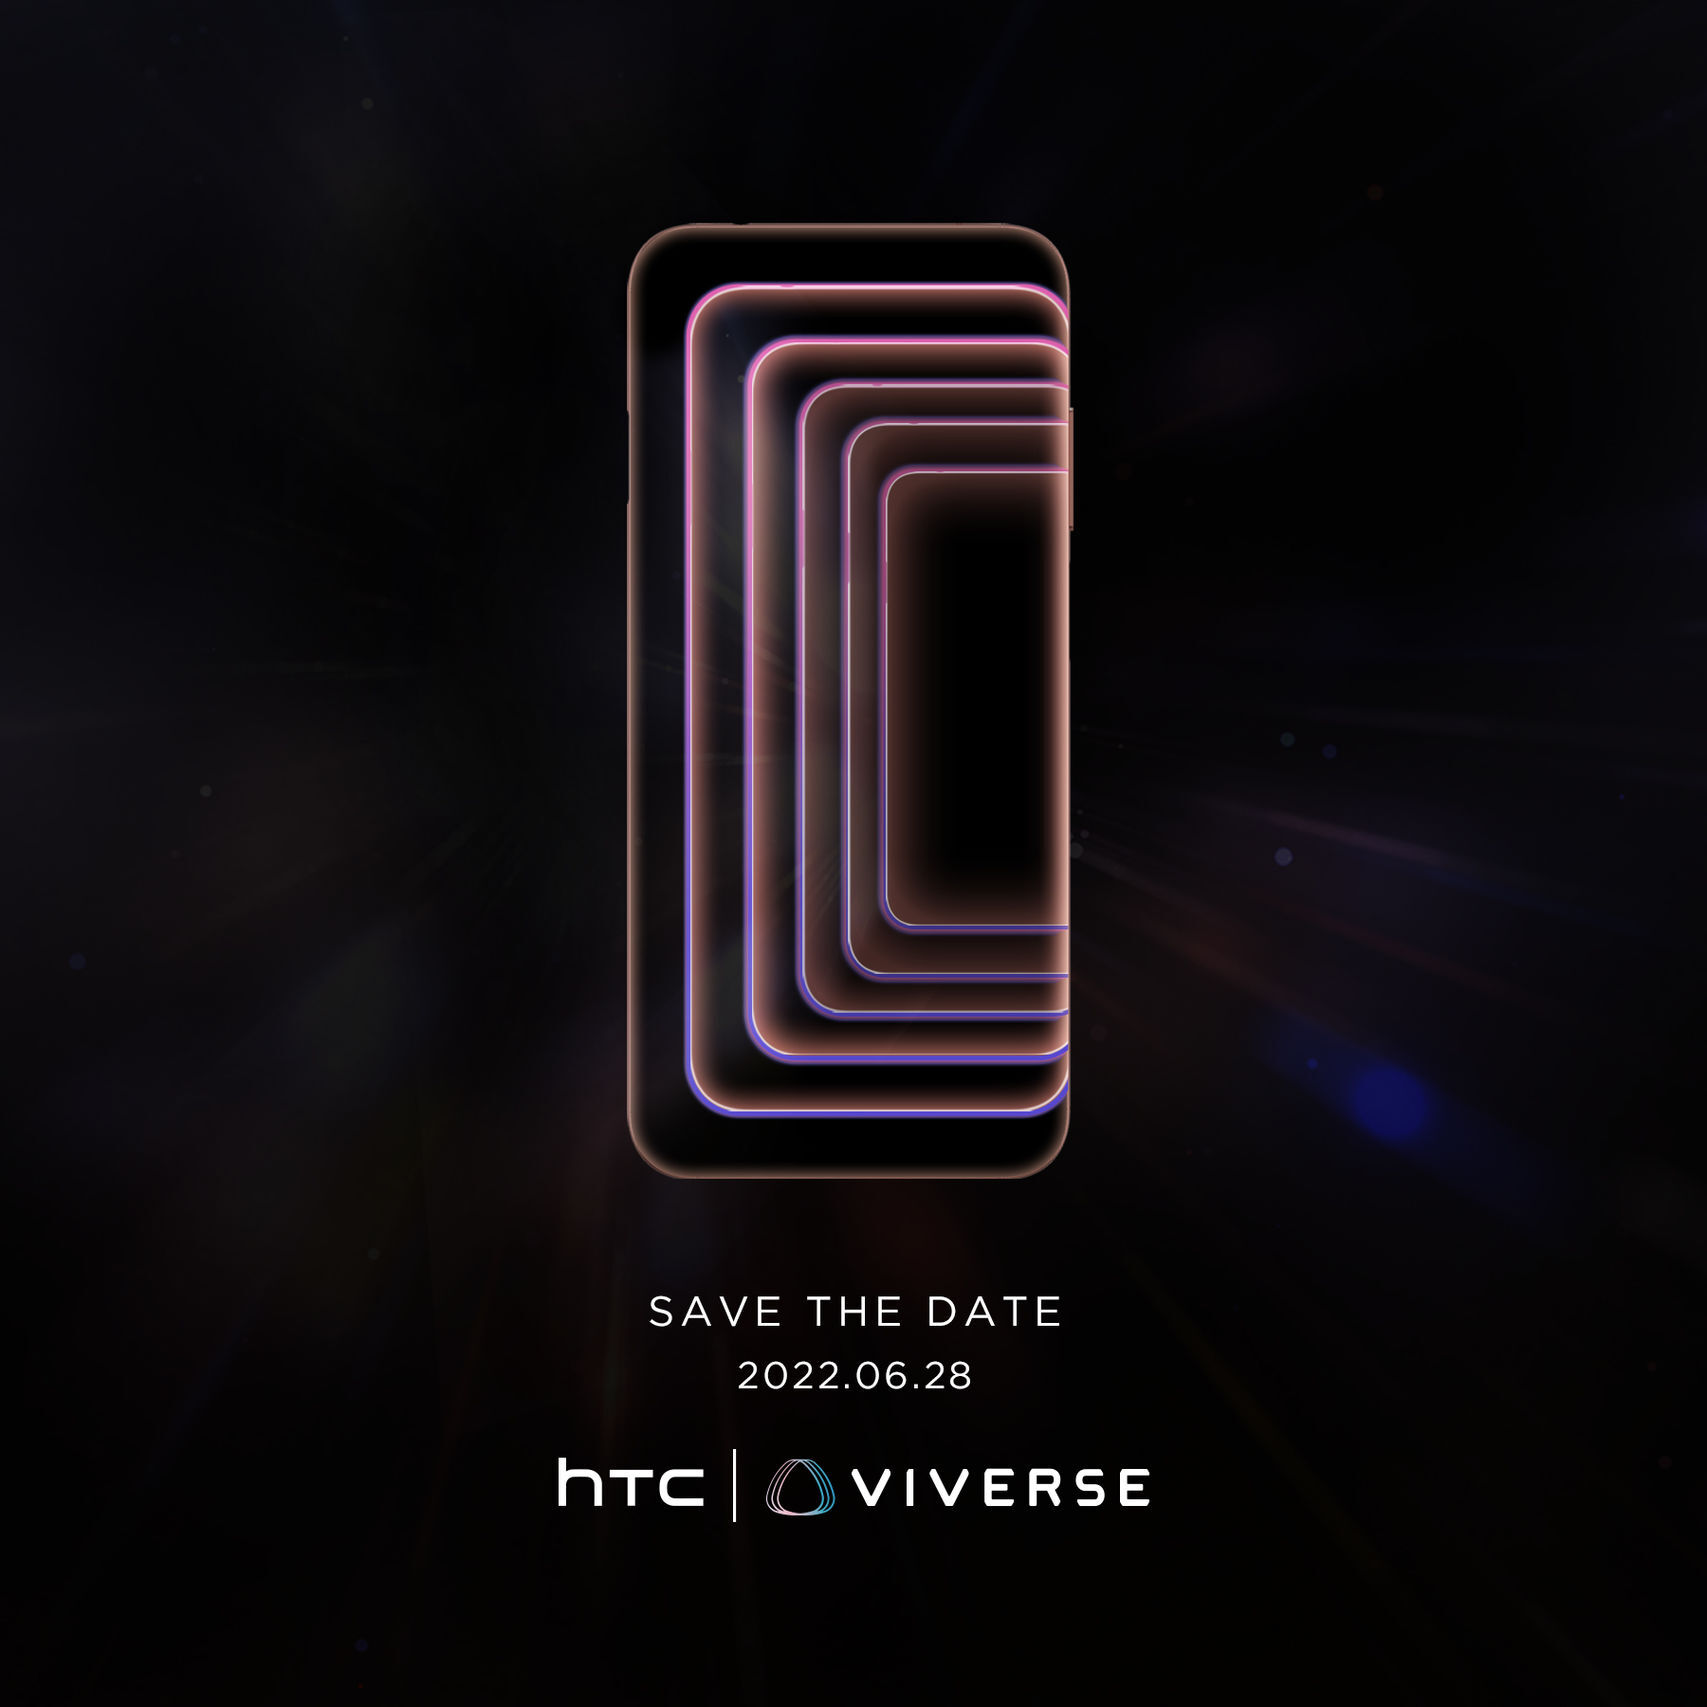 HTC Viveverse